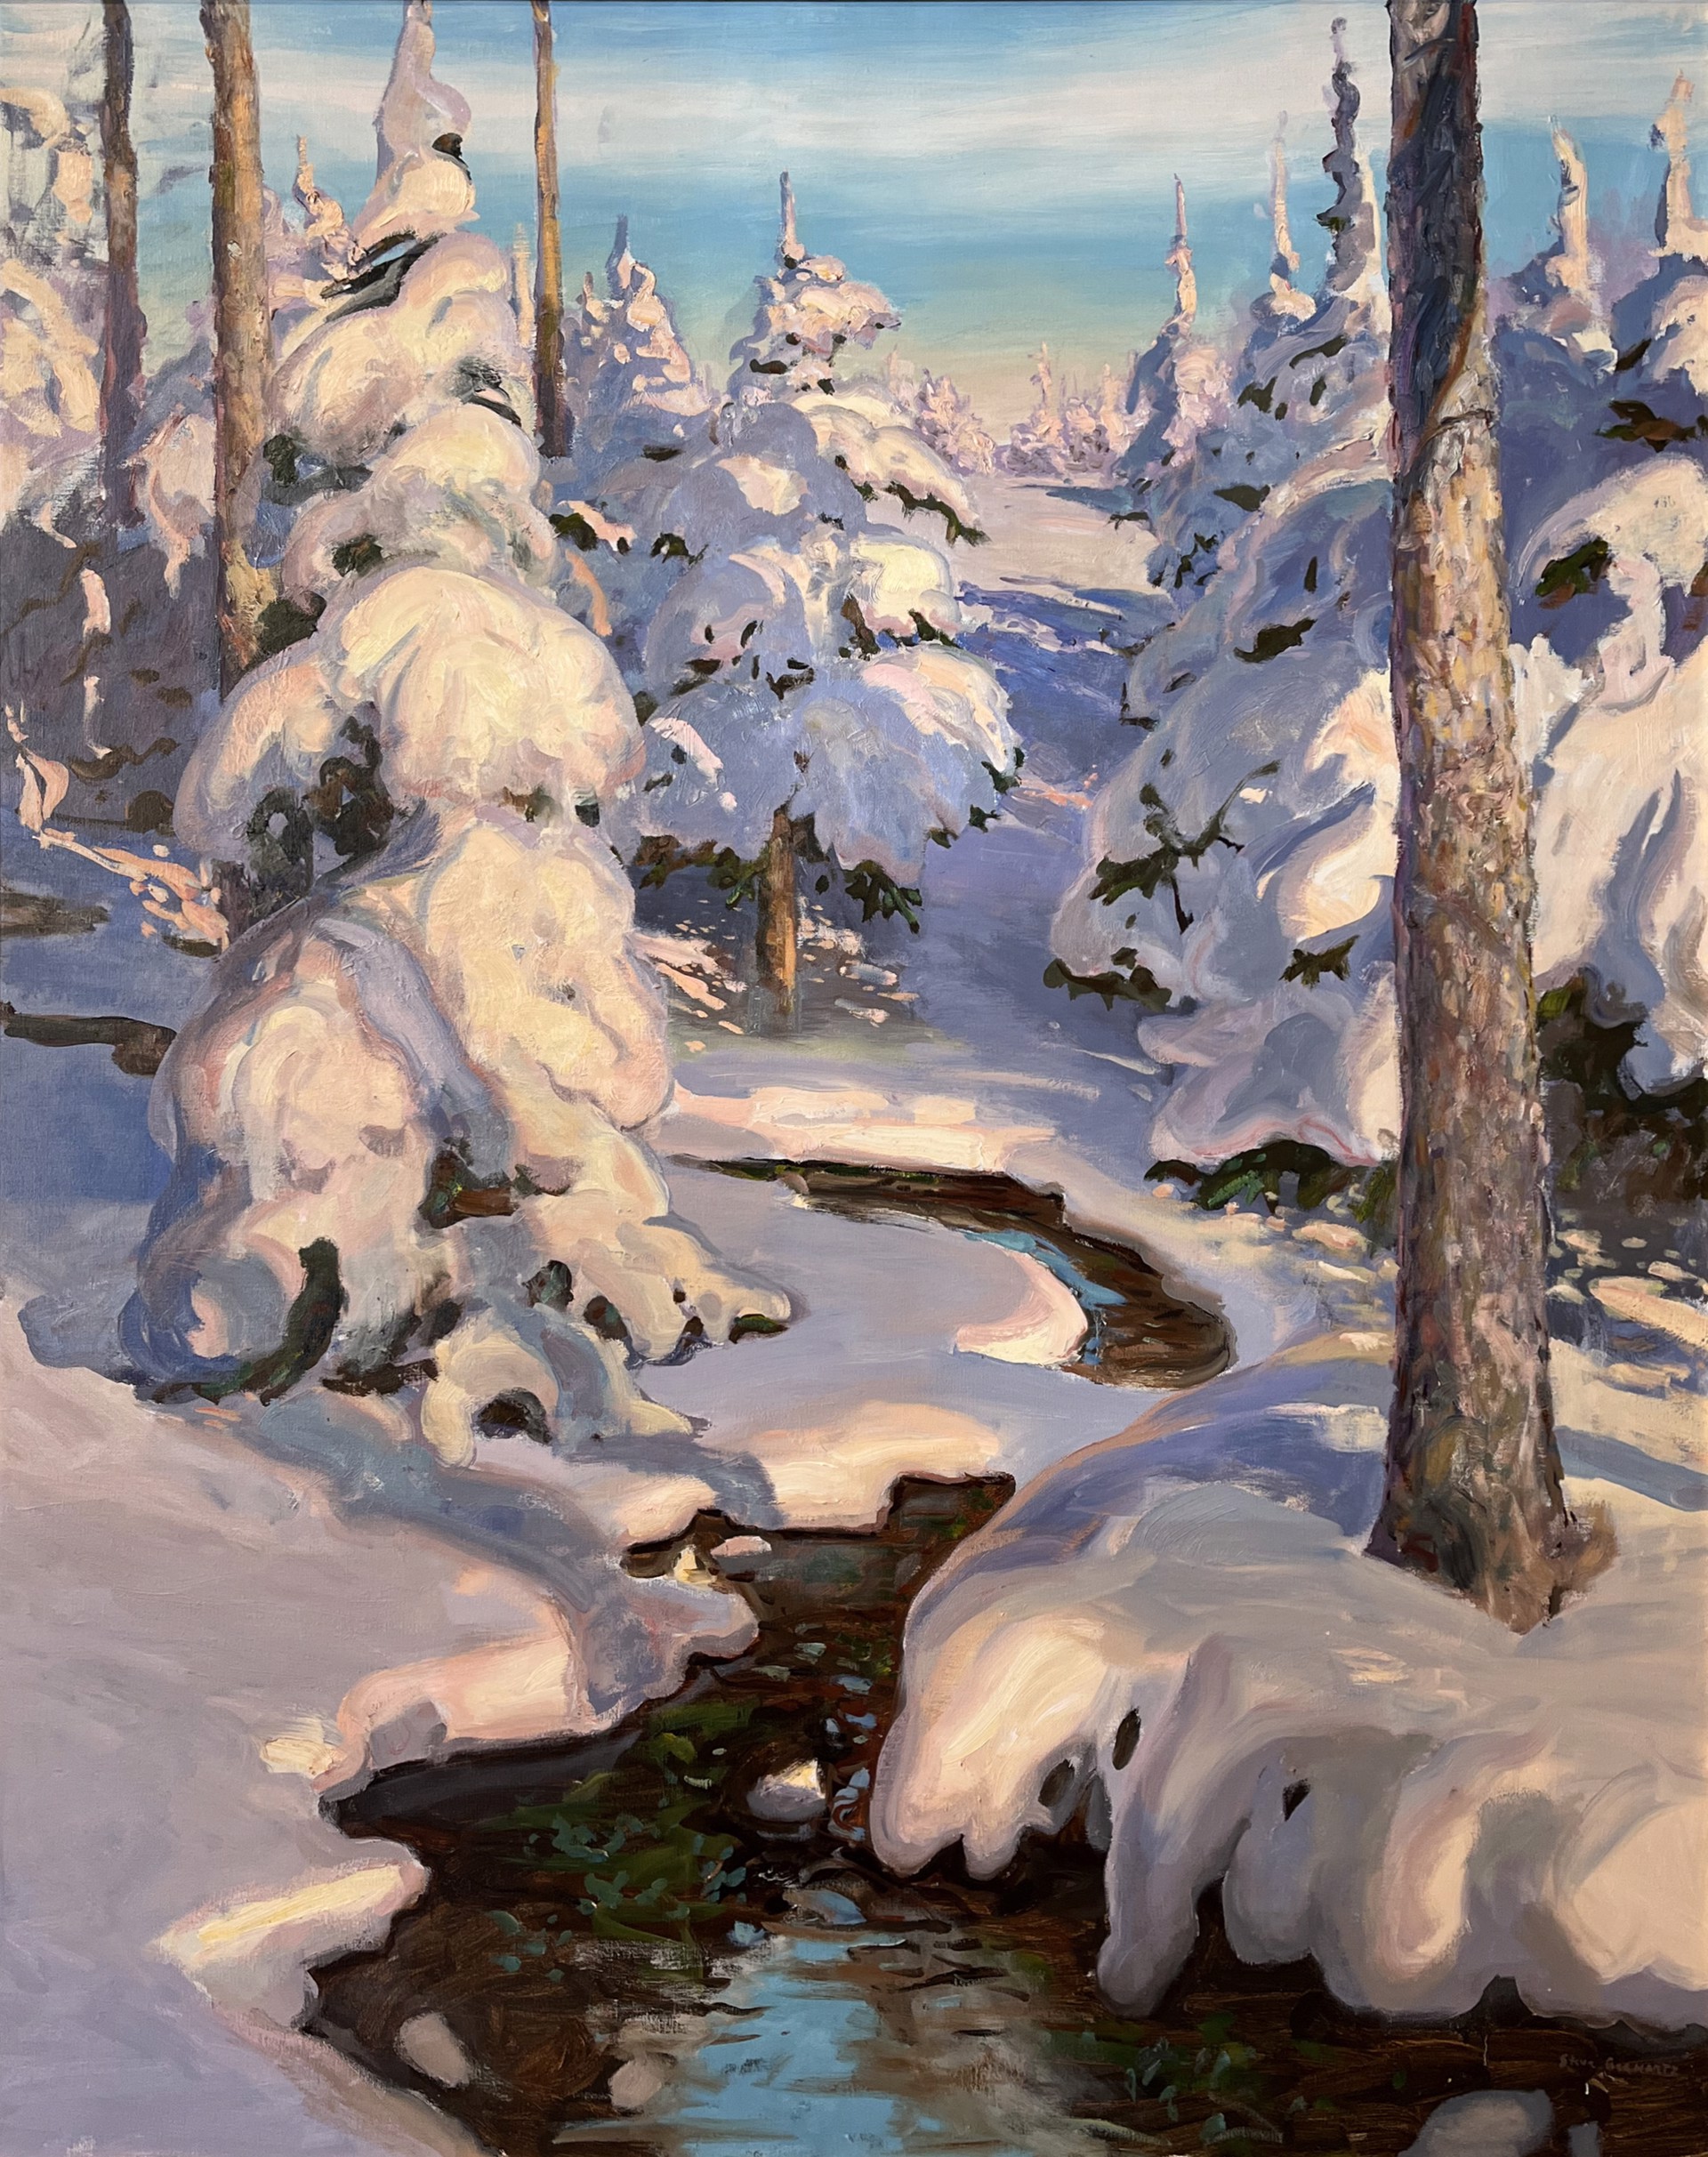 Spruces in Winter by Steve Gerhartz